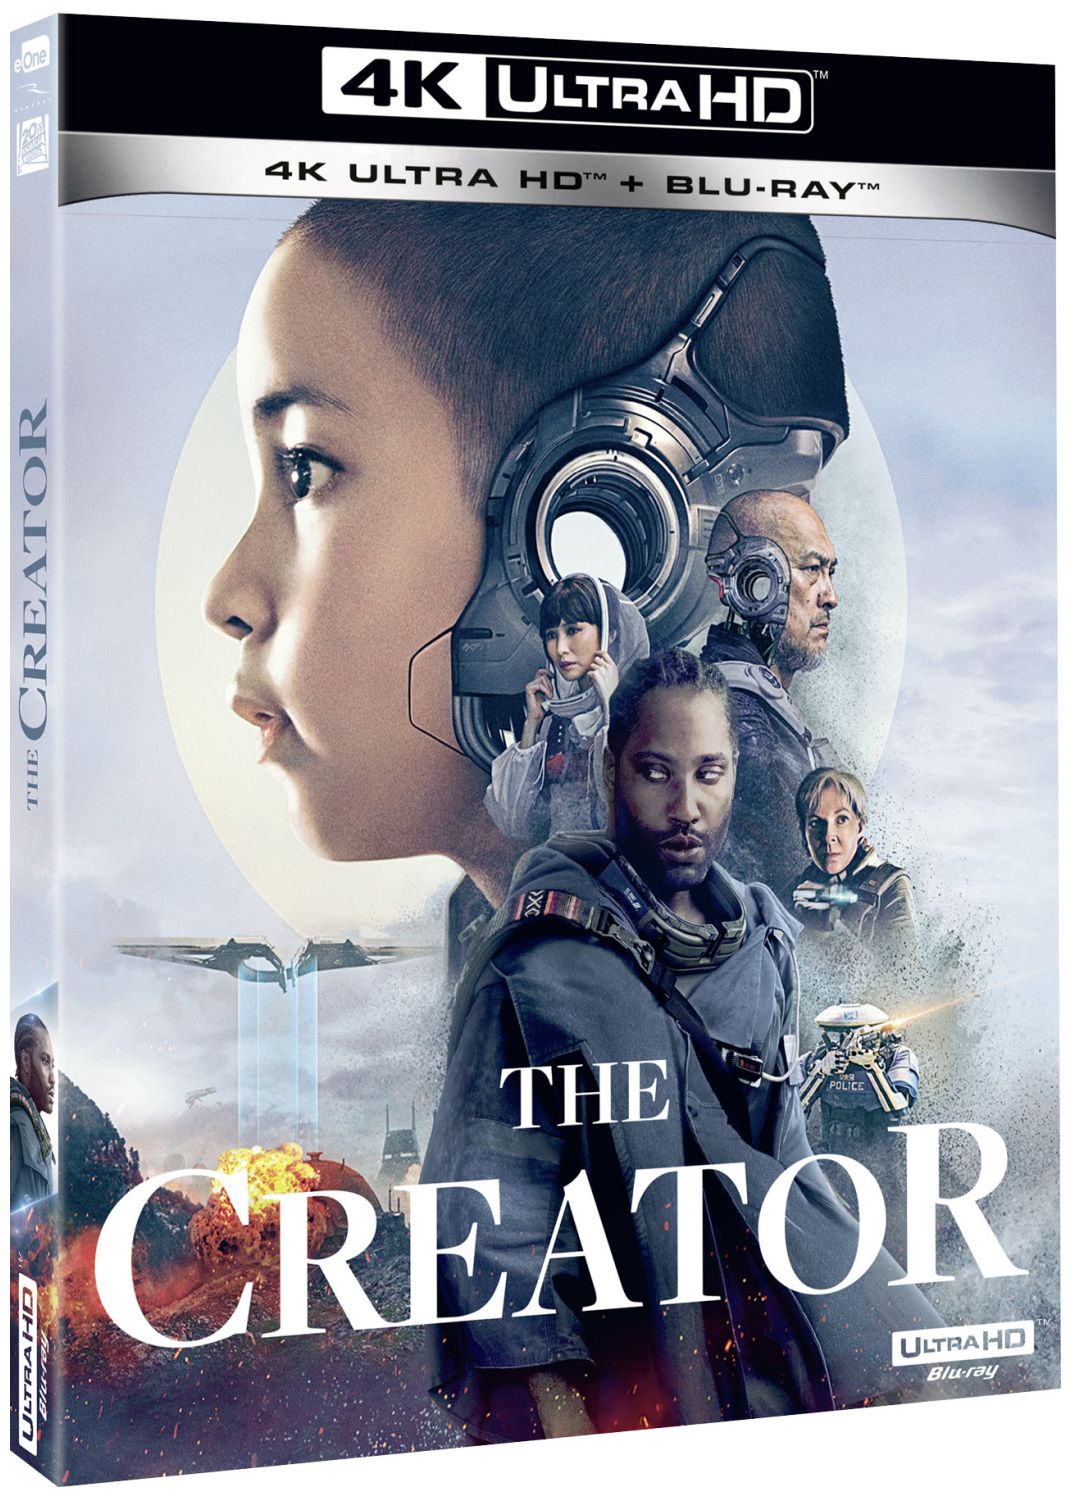 The Creator [DVD/Blu-ray et 4K UHD à la location]